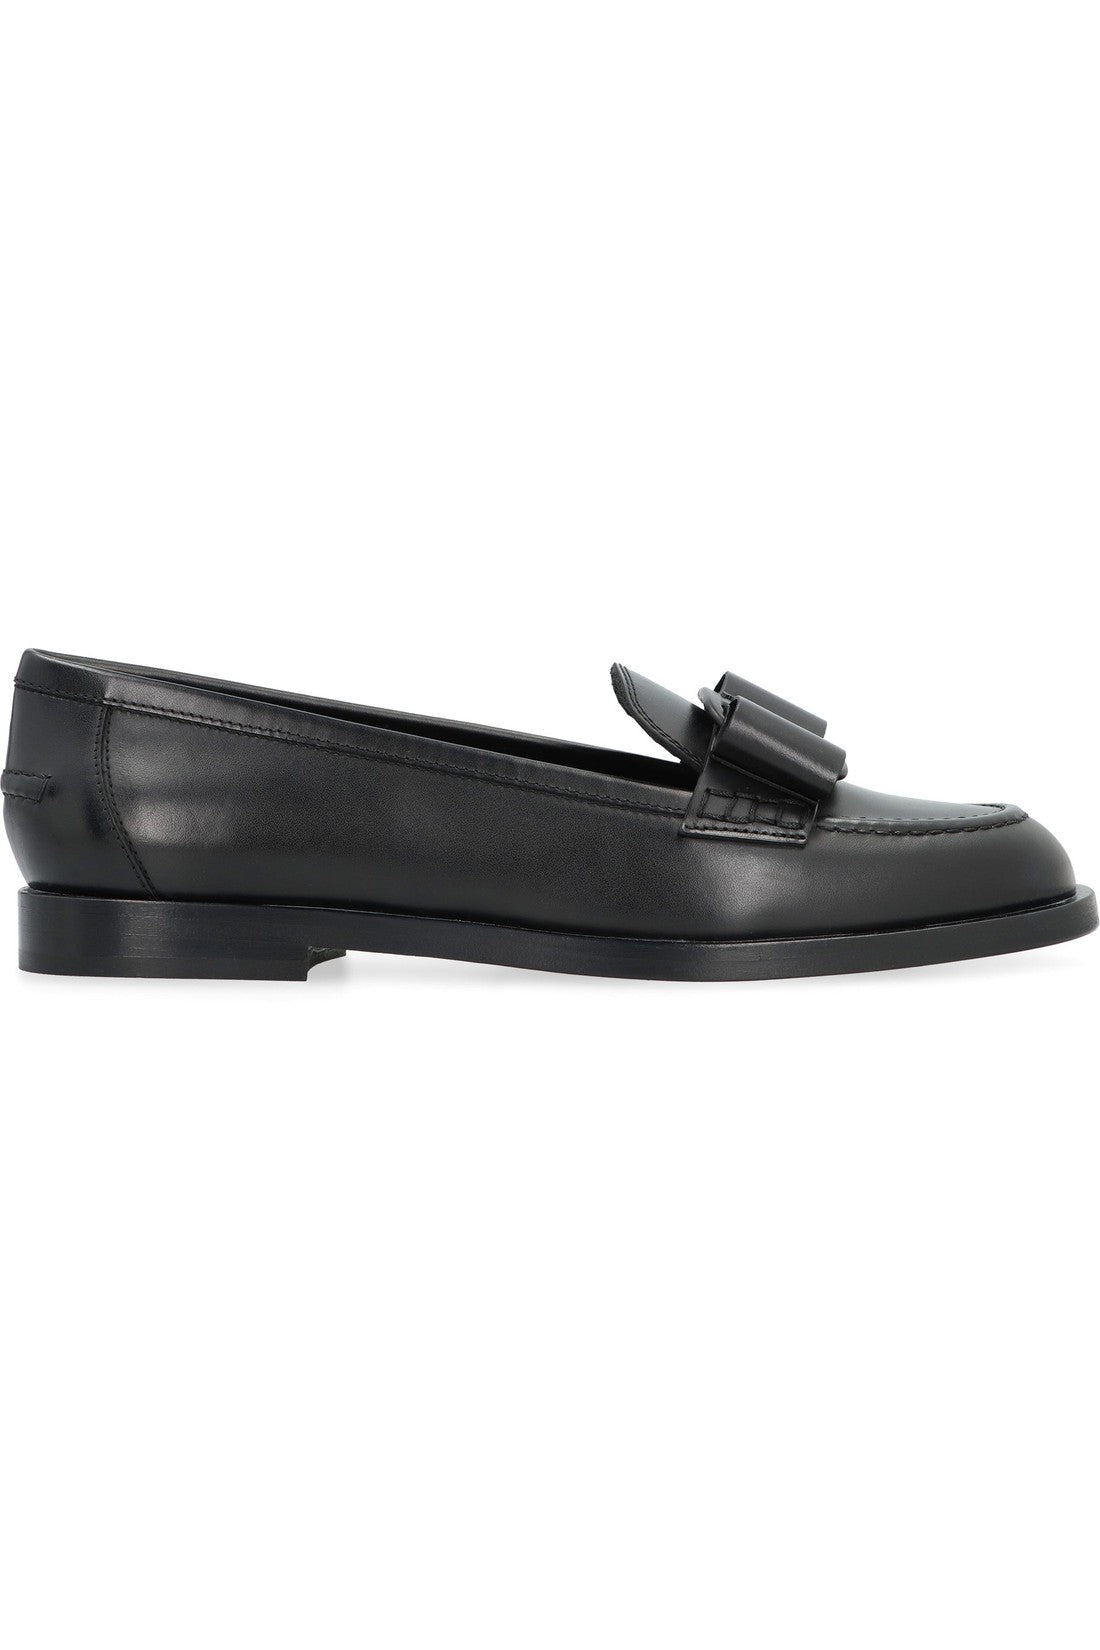 FERRAGAMO-OUTLET-SALE-Vivaldo leather loafers-ARCHIVIST